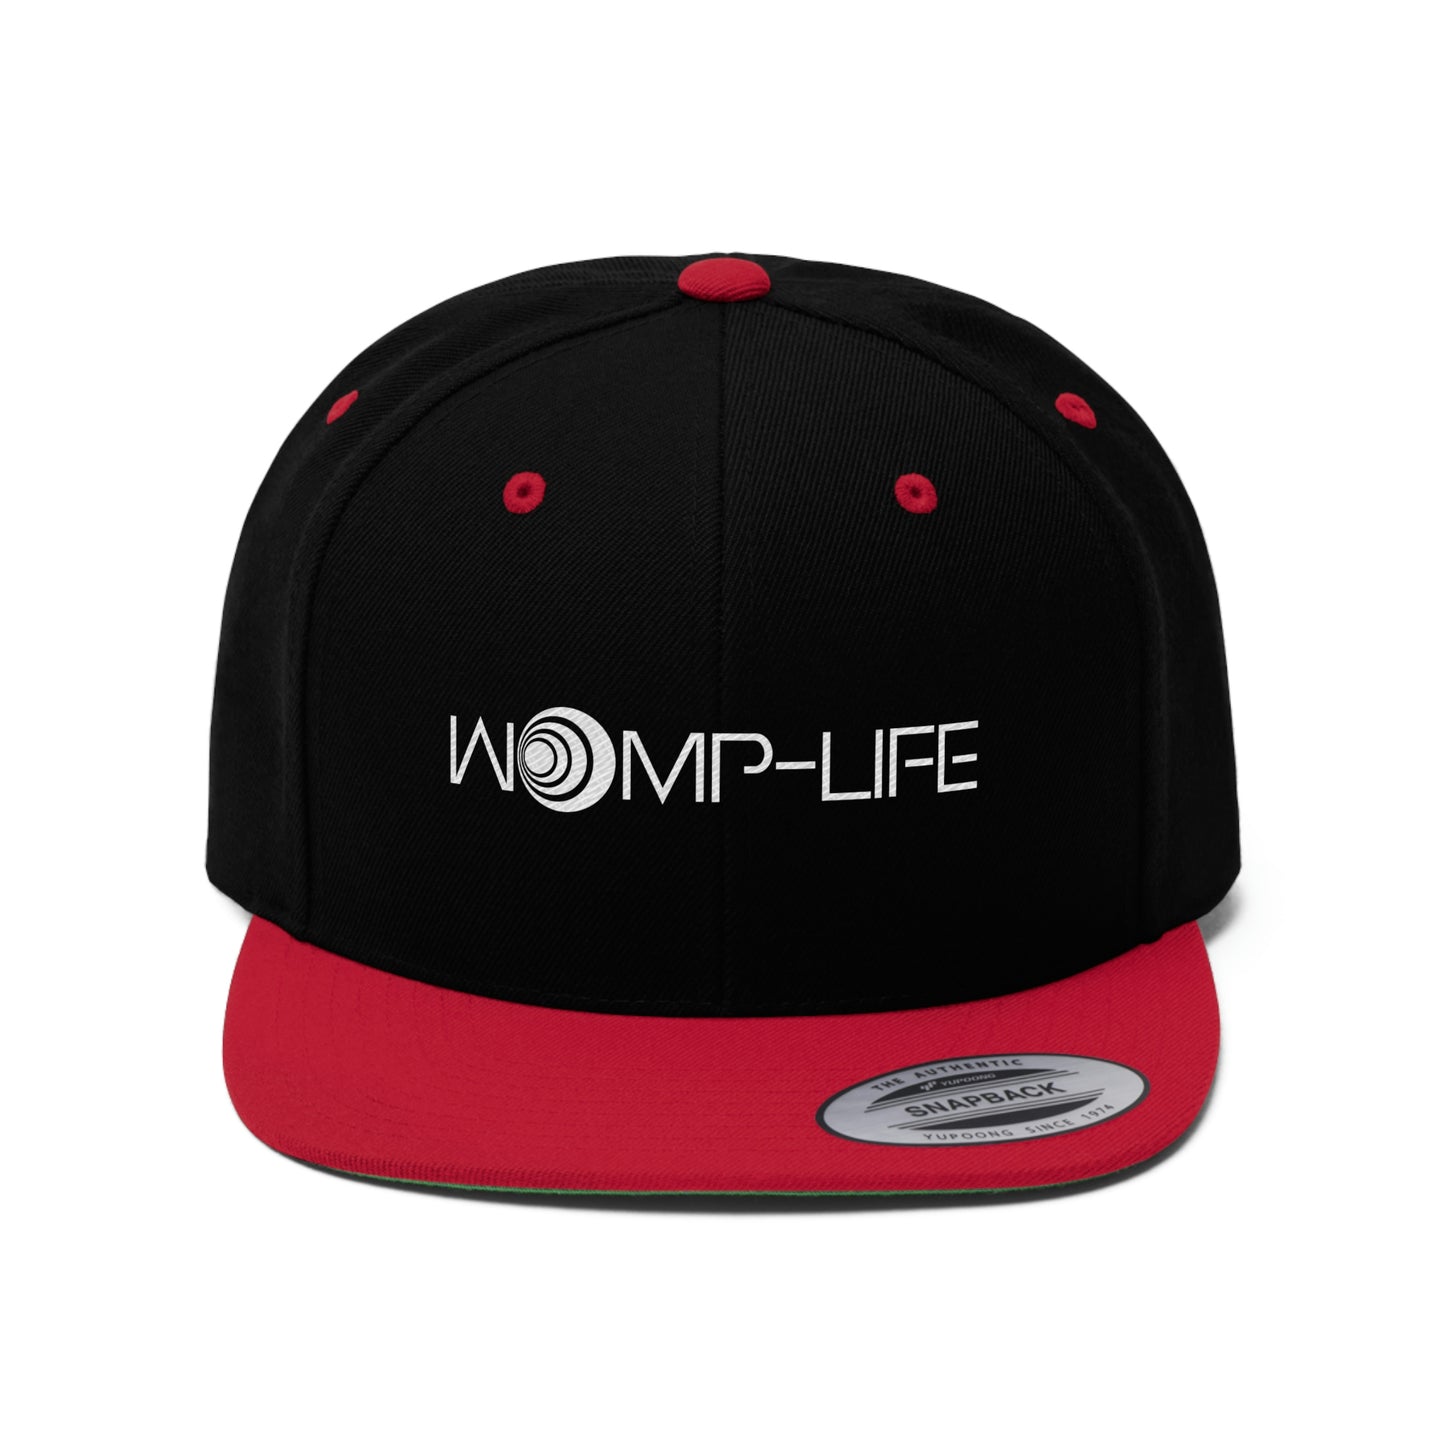 Womp-Life Color Unisex Flat Bill Hat